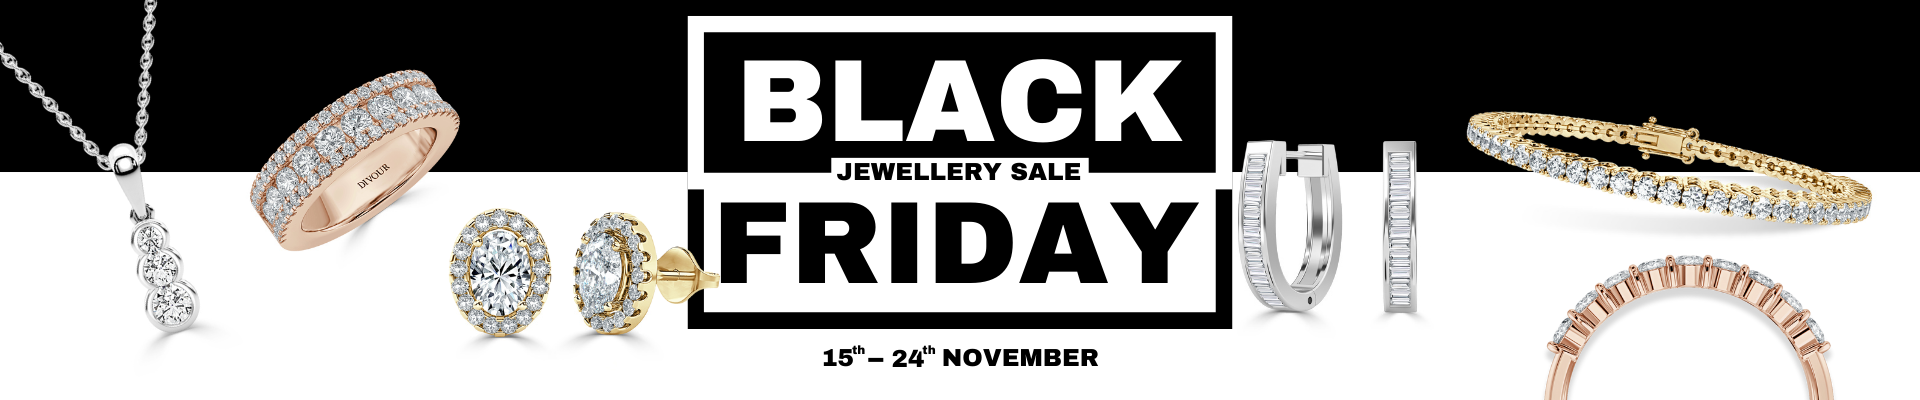 Black Friday Jewellery Sale